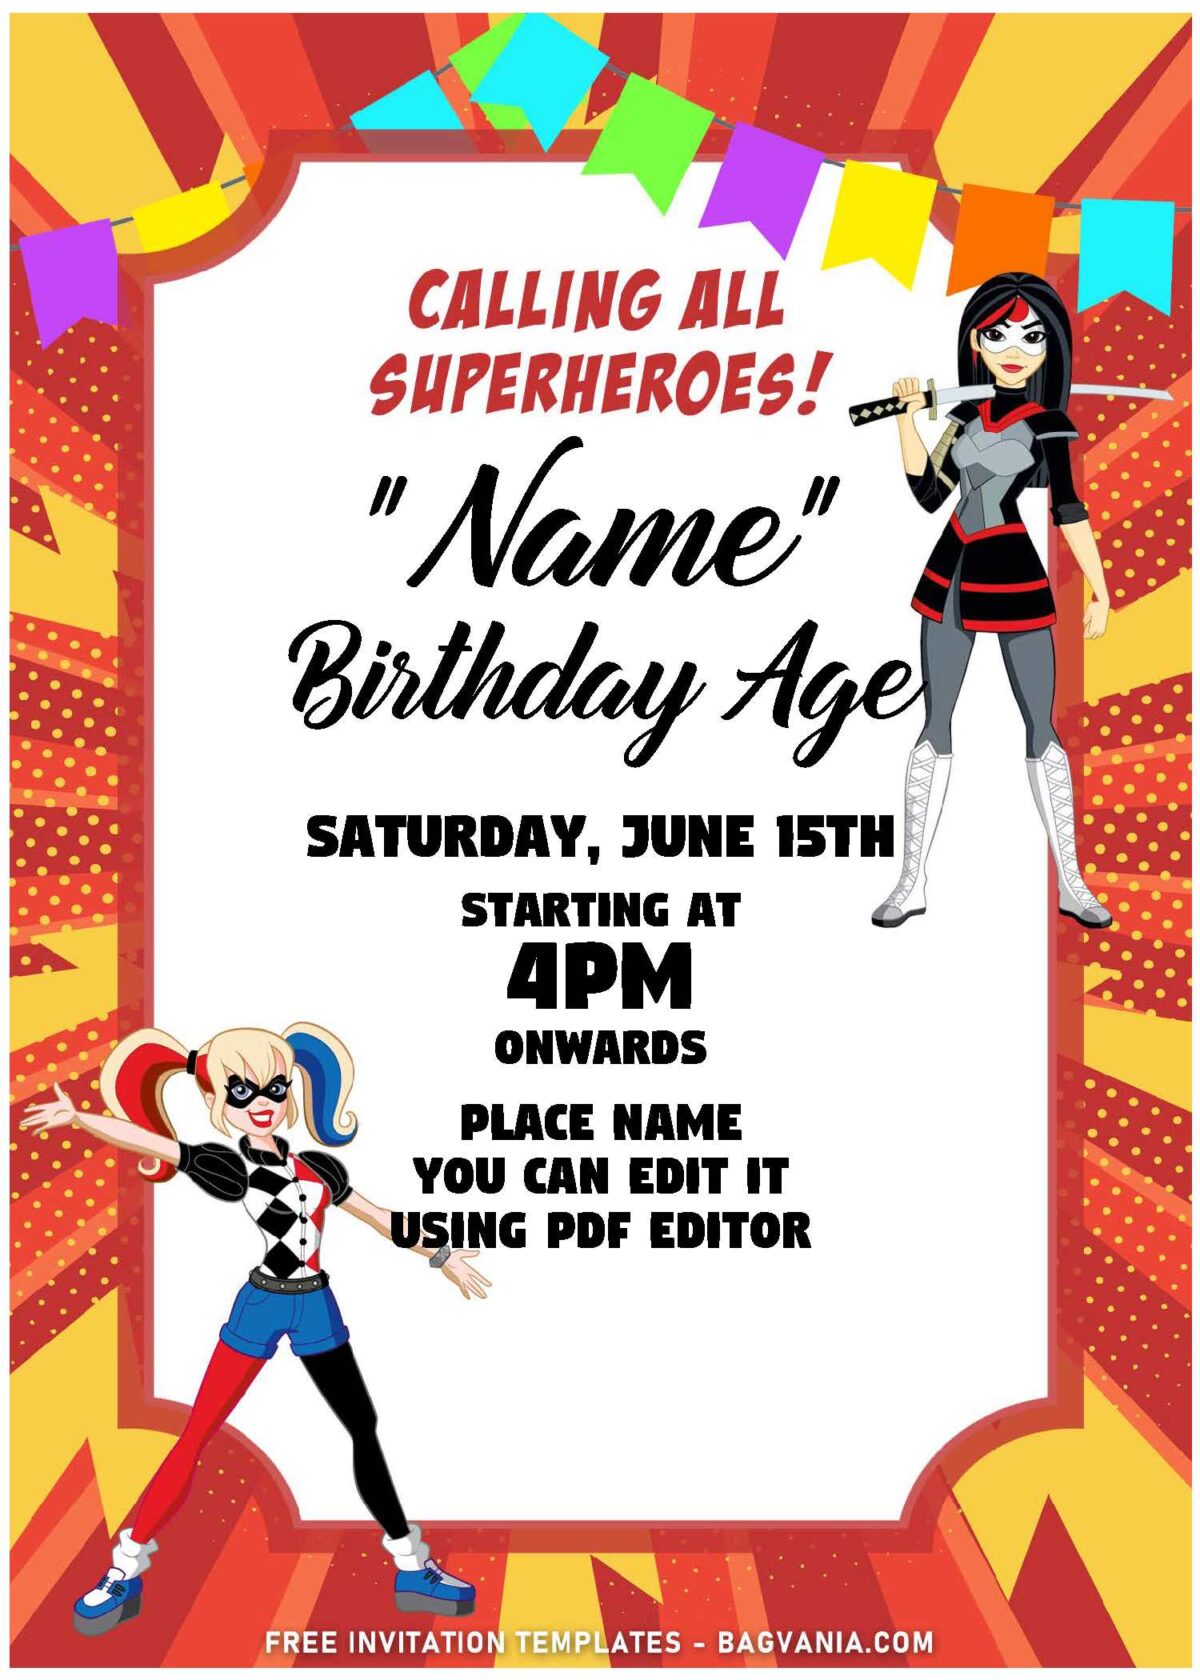 (Free Editable PDF) Super FUN-TASTIC DC Superhero Girls Birthday Invitation Templates with comic background